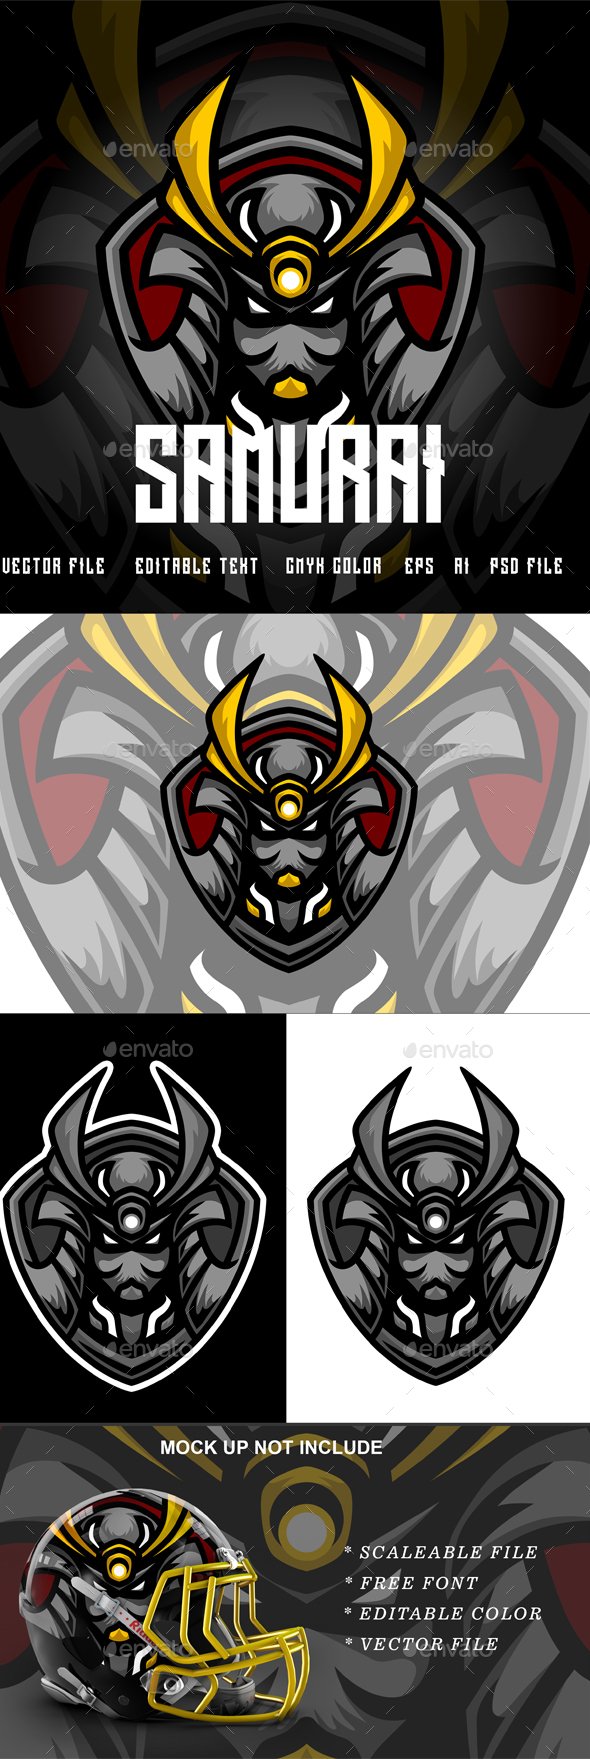 Samurai Gaming and Mascot Esport Logo